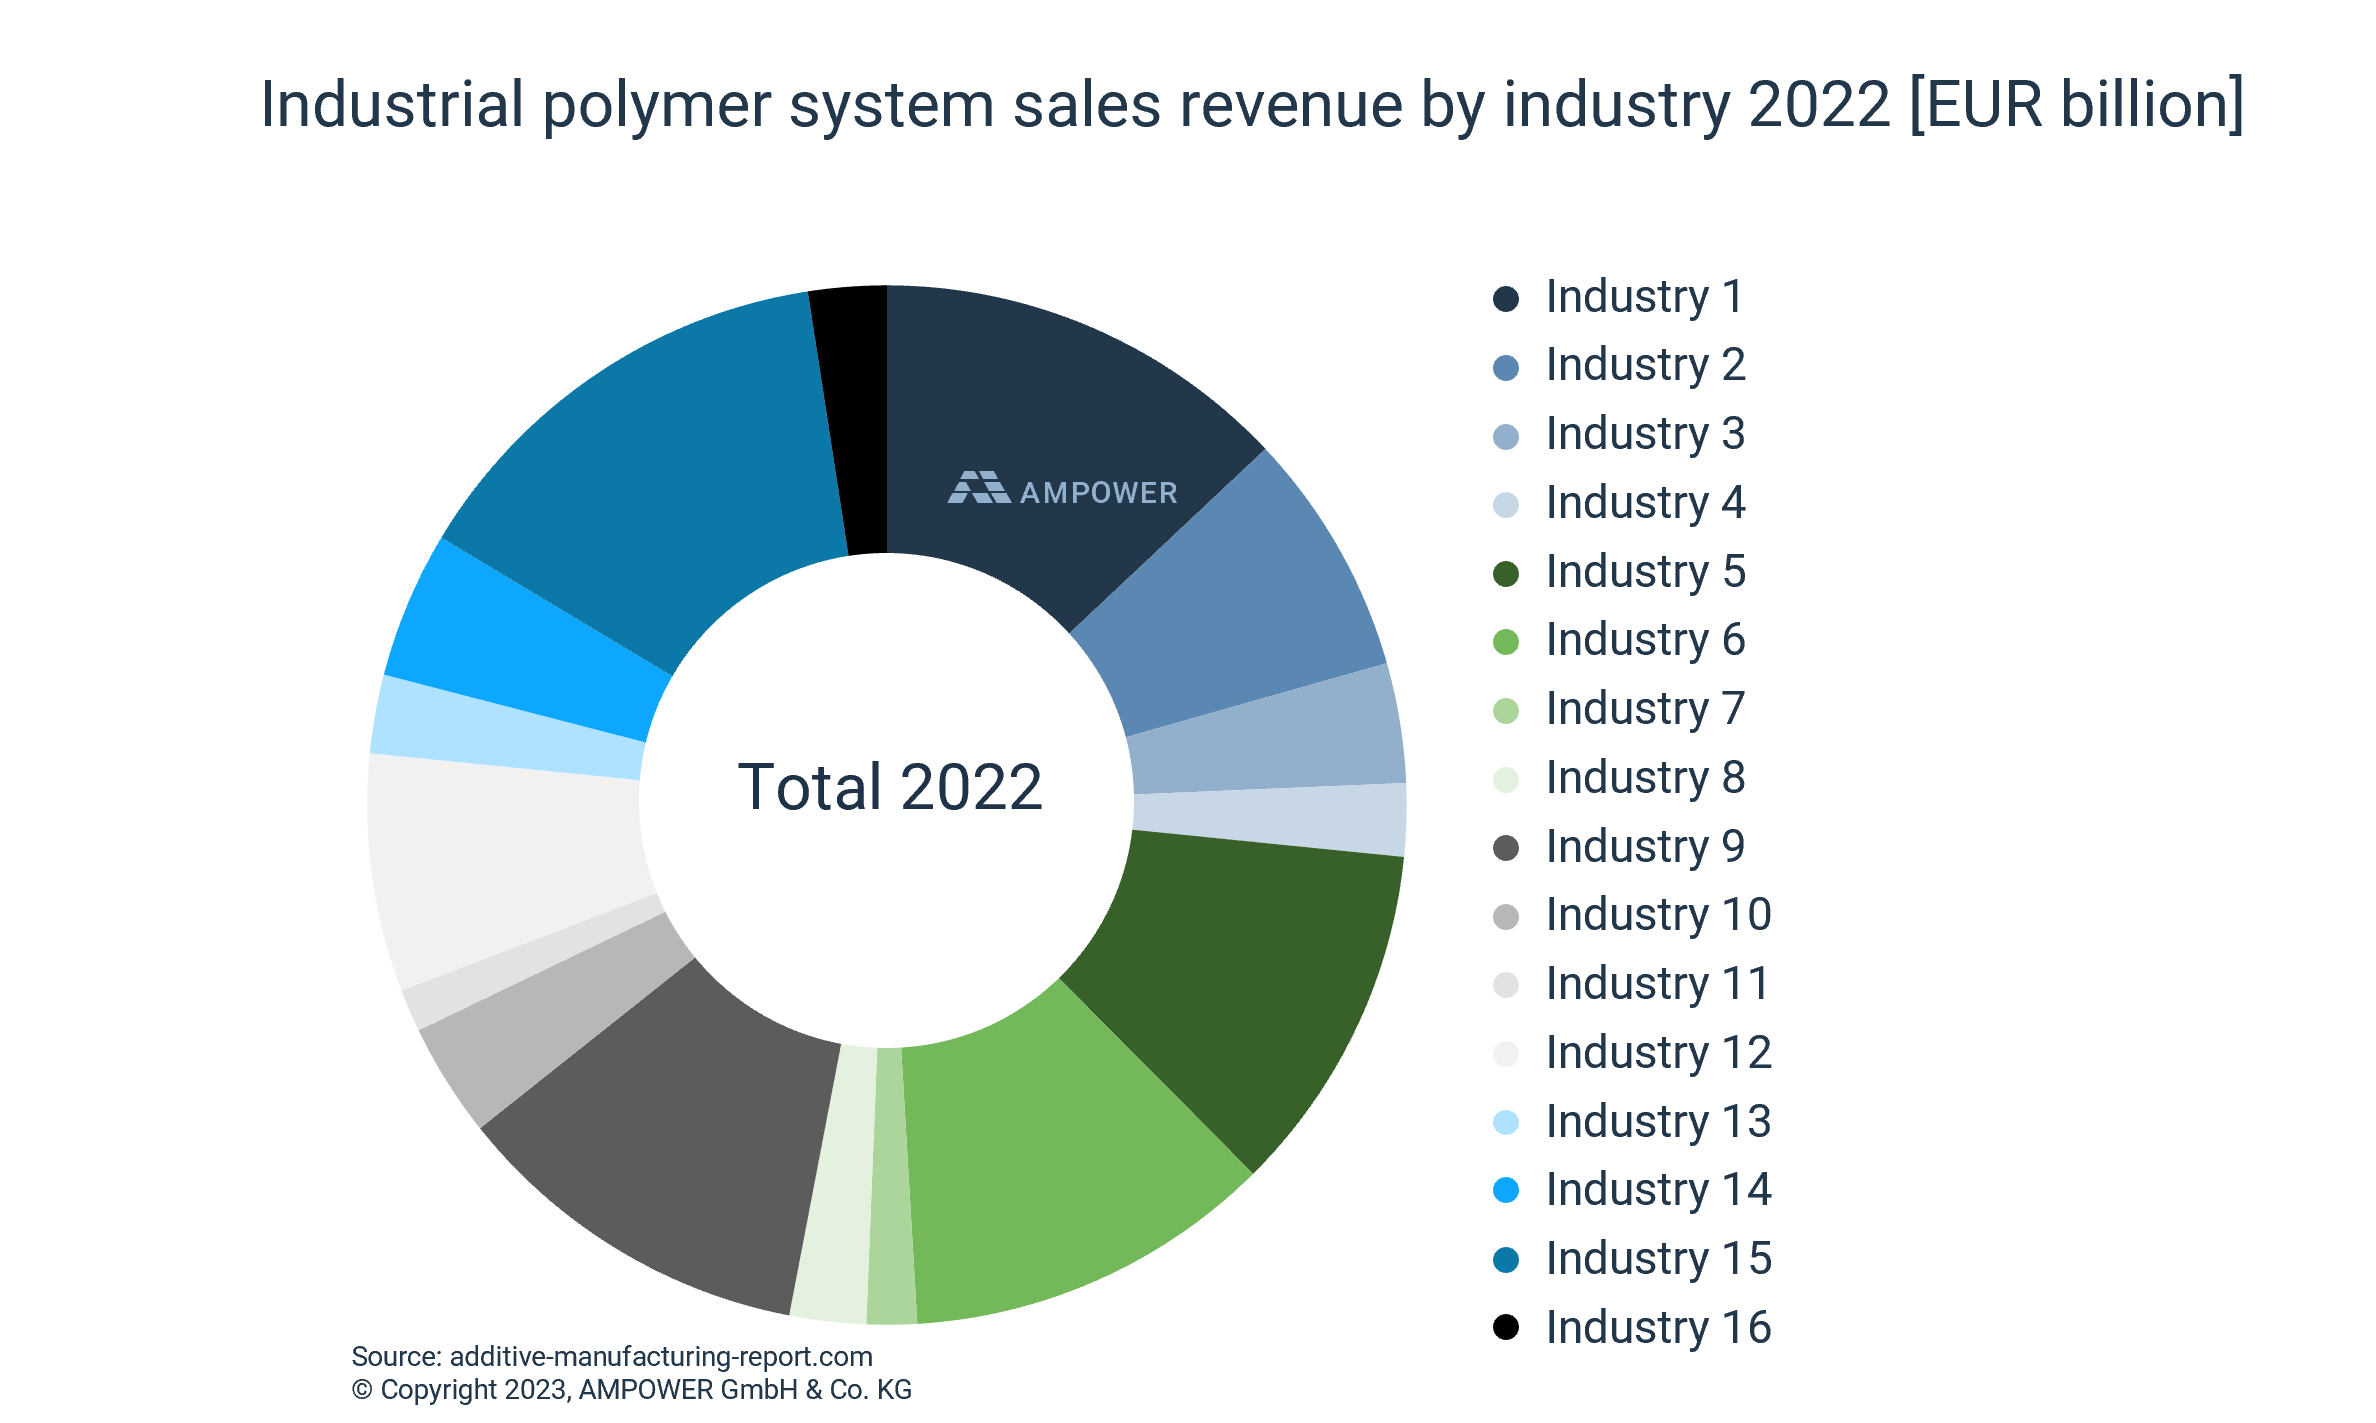 Industrial polymer system sales revenue by industry 2022 [EUR billion]_dummie